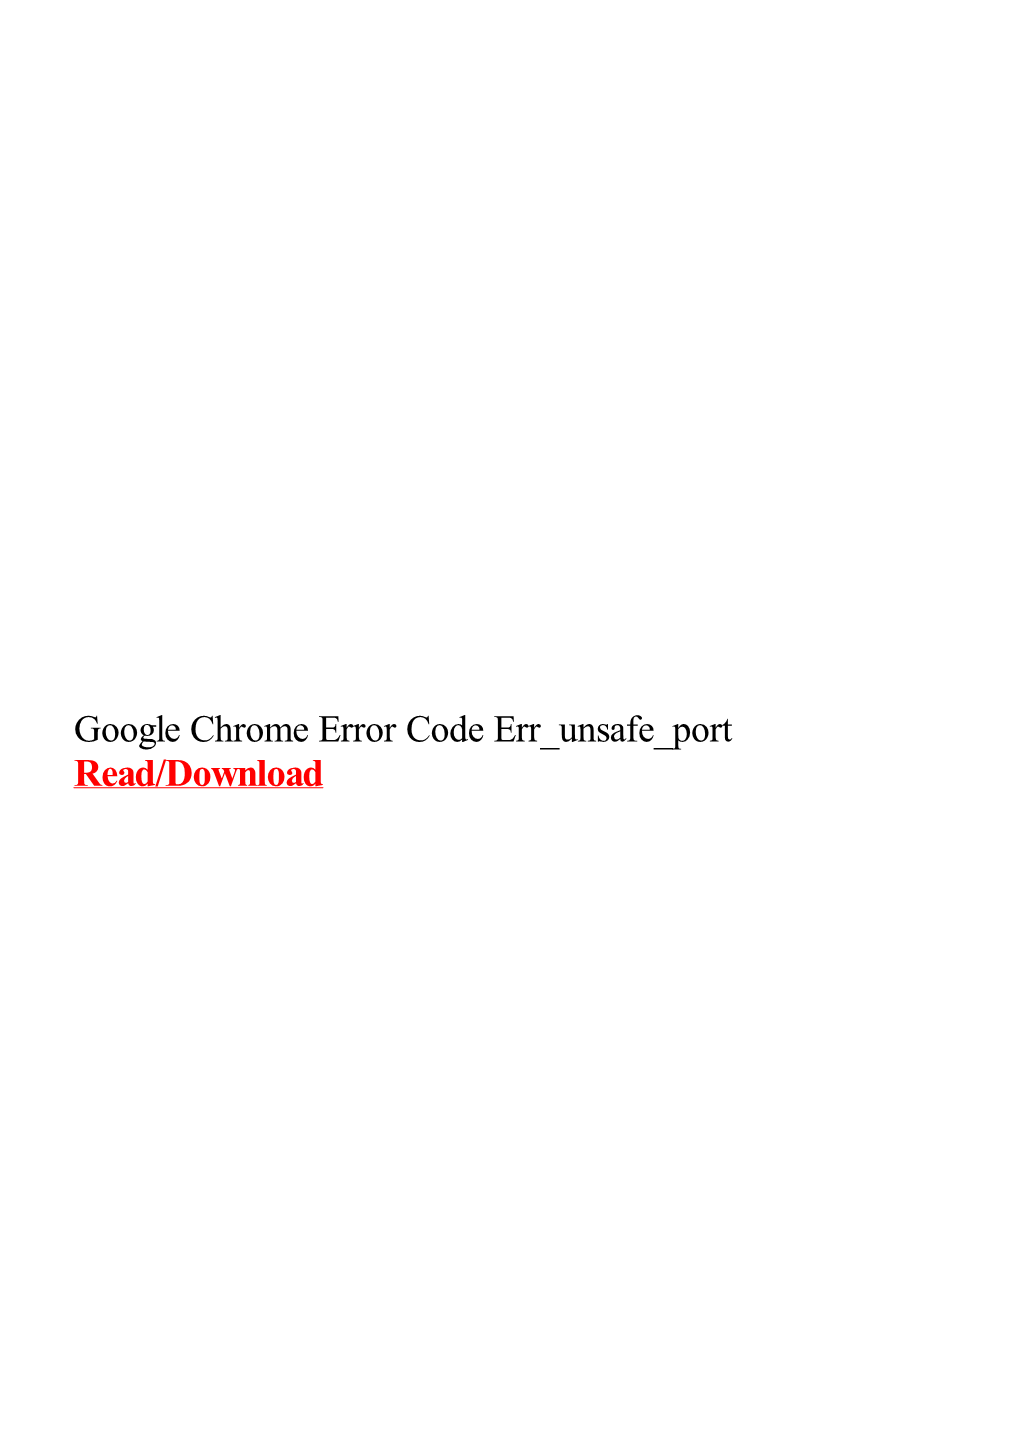 Google Chrome Error Code Err Unsafe Port